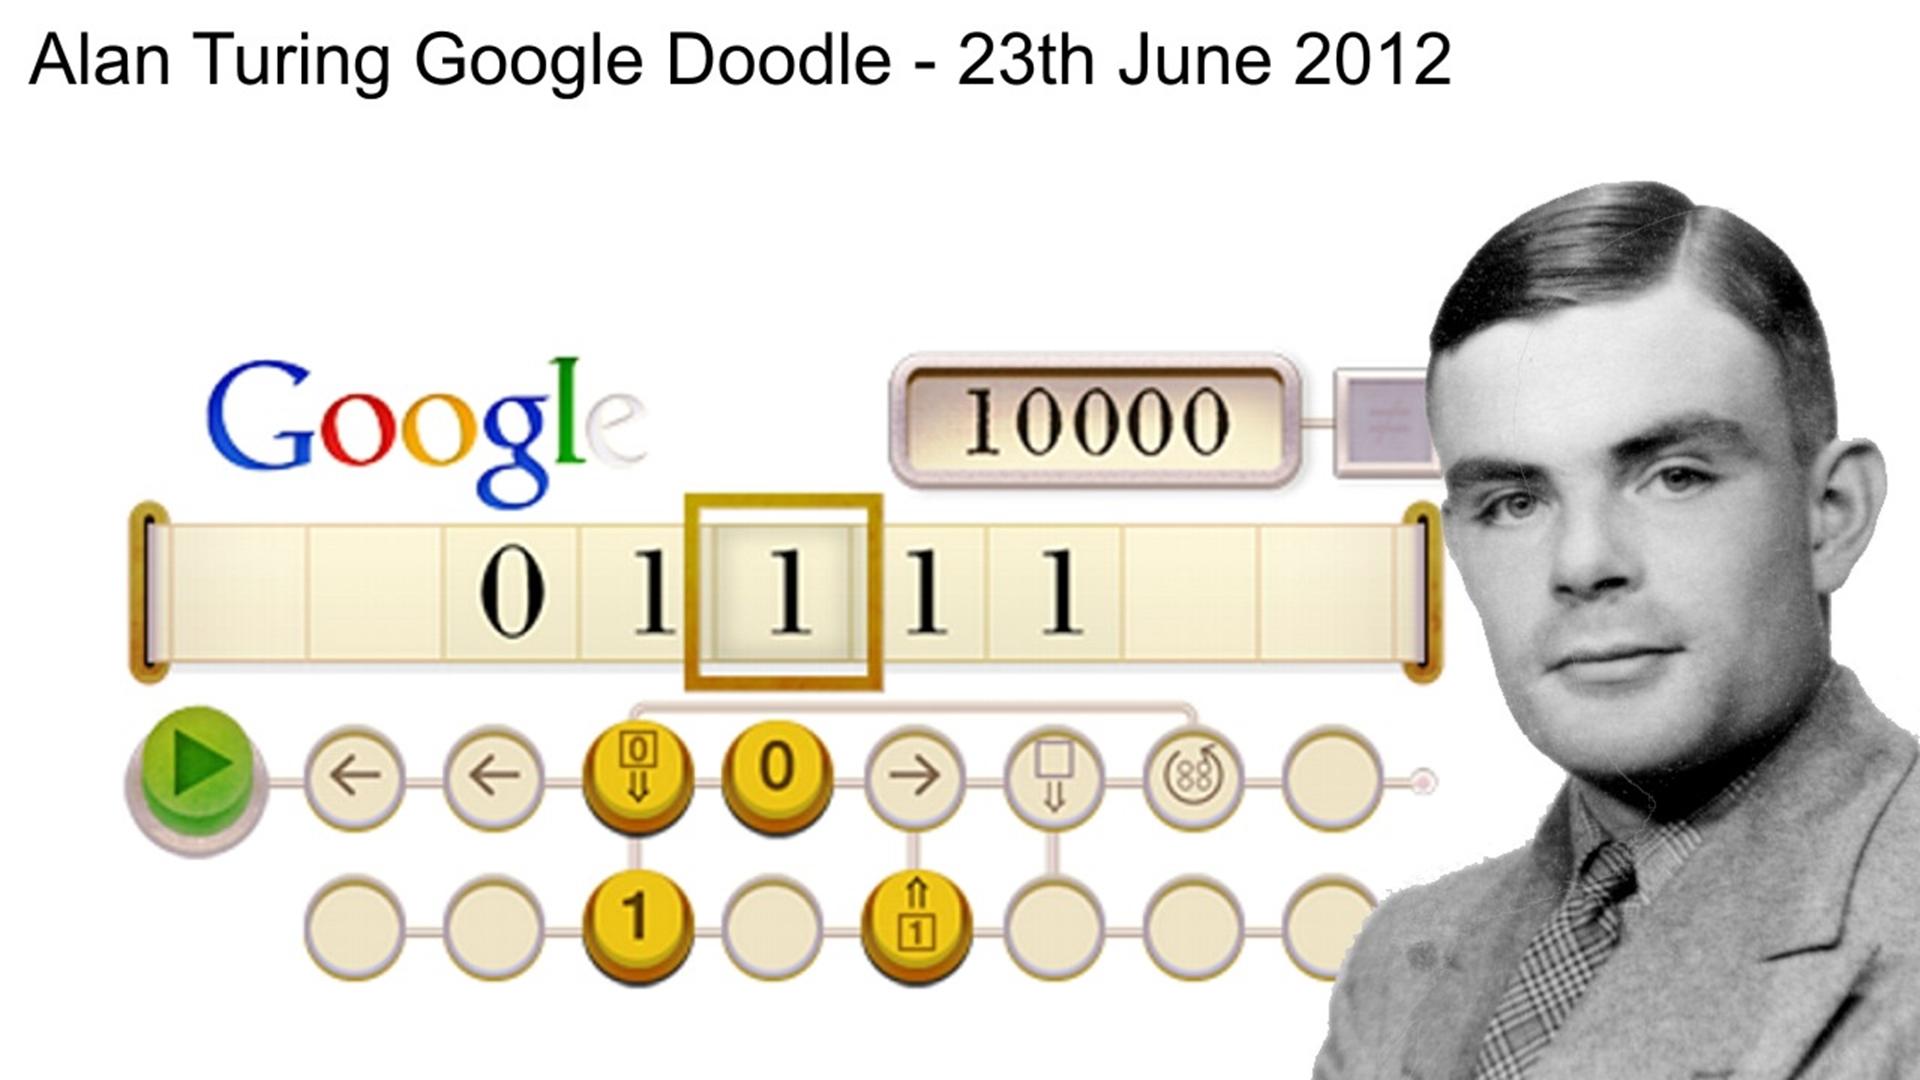 Alan Turing Computing Pioneer 100 Years later